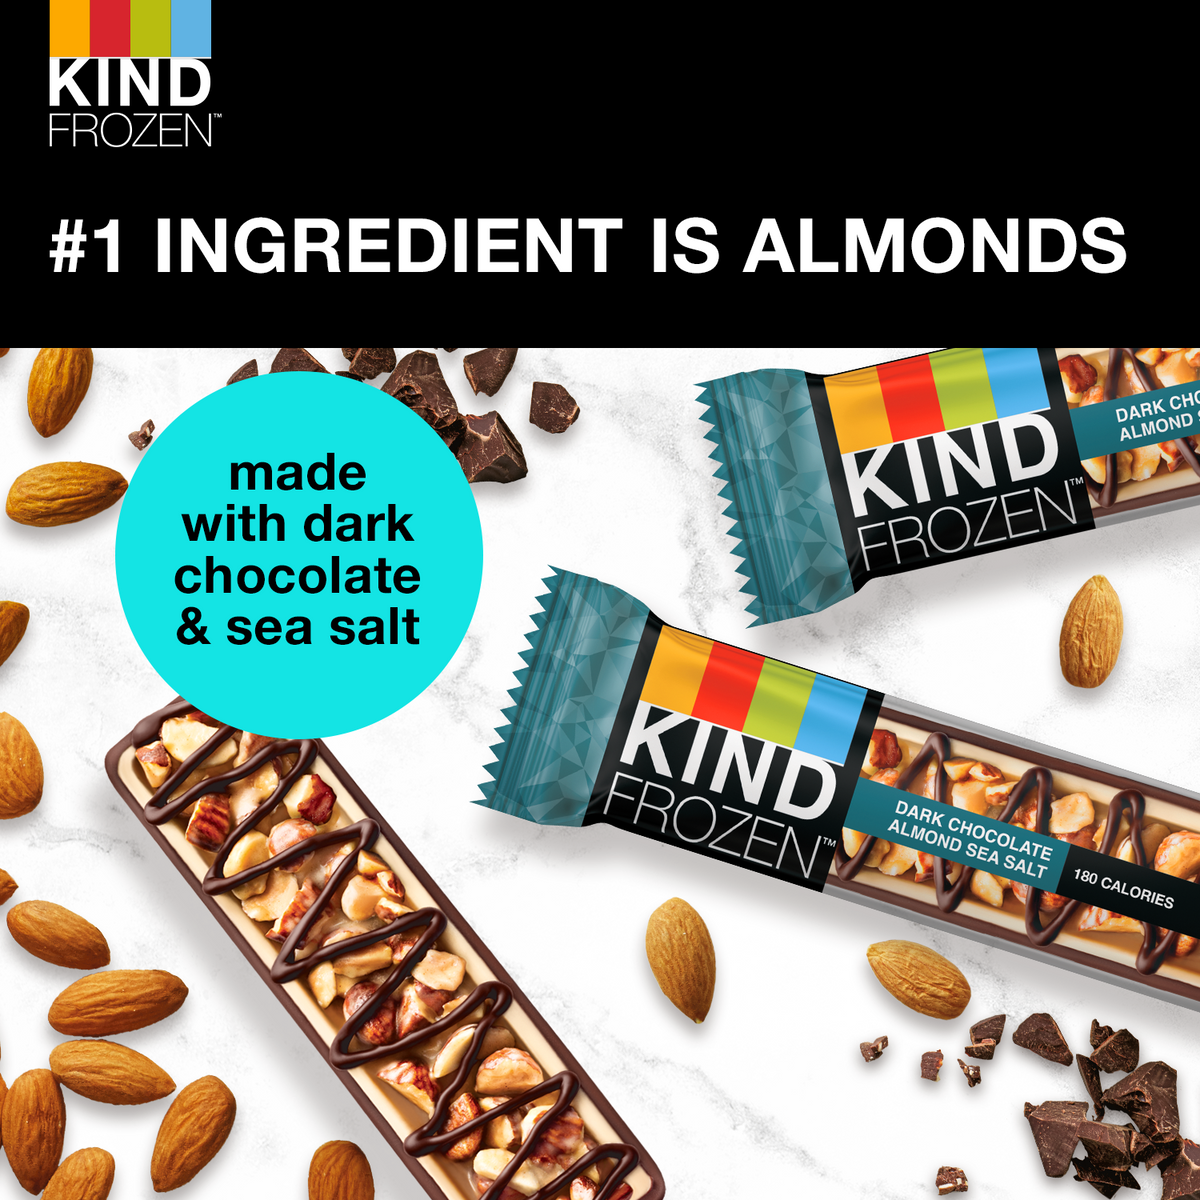 Kind Frozen, Dark Chocolate Peanut Butter Bar, 1.60 oz (24 count) –  icecreamsource